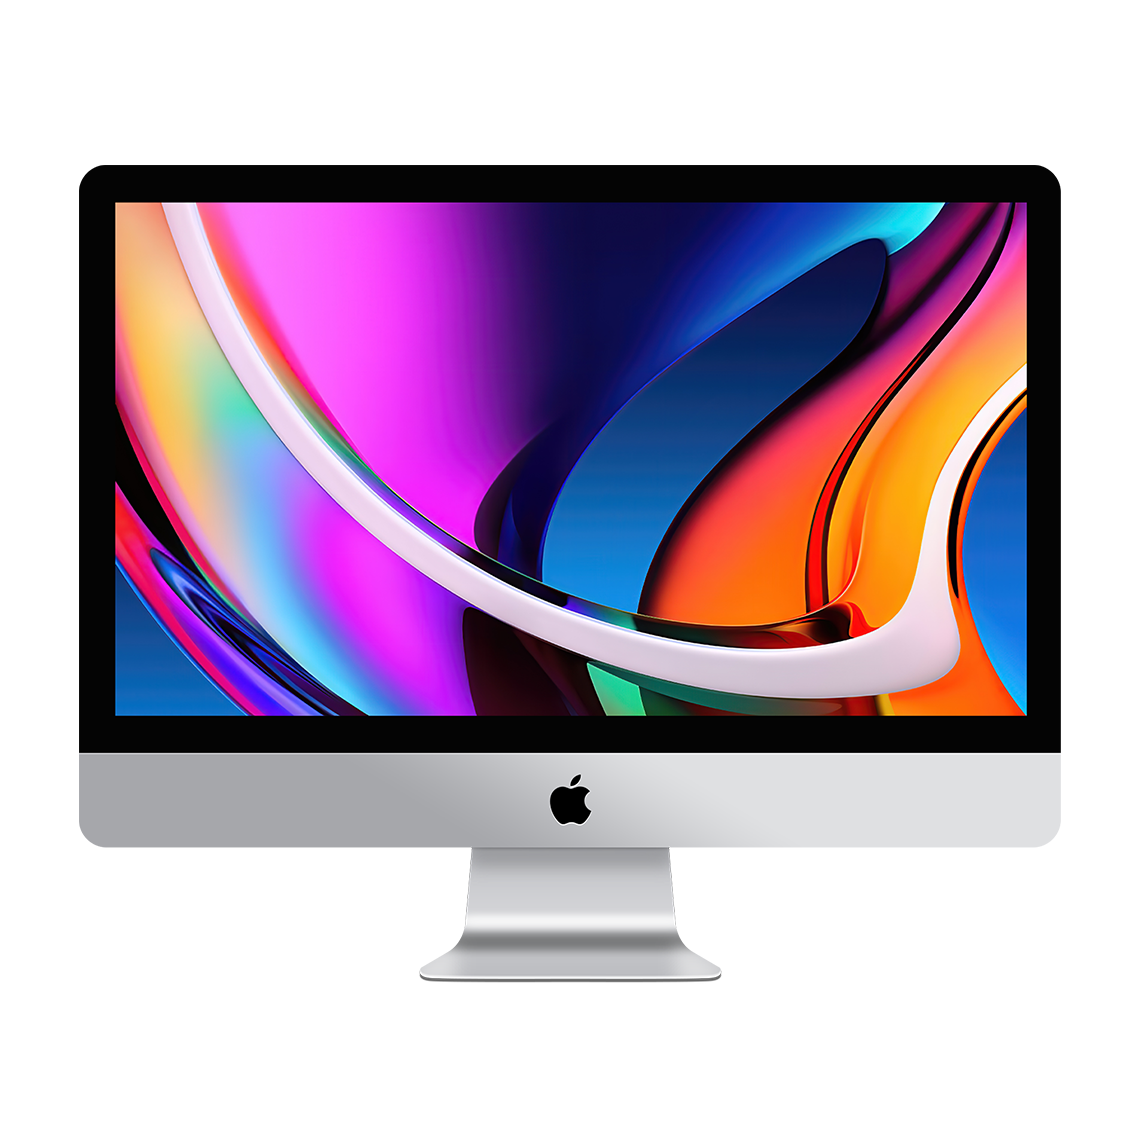 2020 iMac 27-inch 5K - Intel Core i9, 16GB, 512GB Flash, Radeon Pro 5700 8GB, Grade A